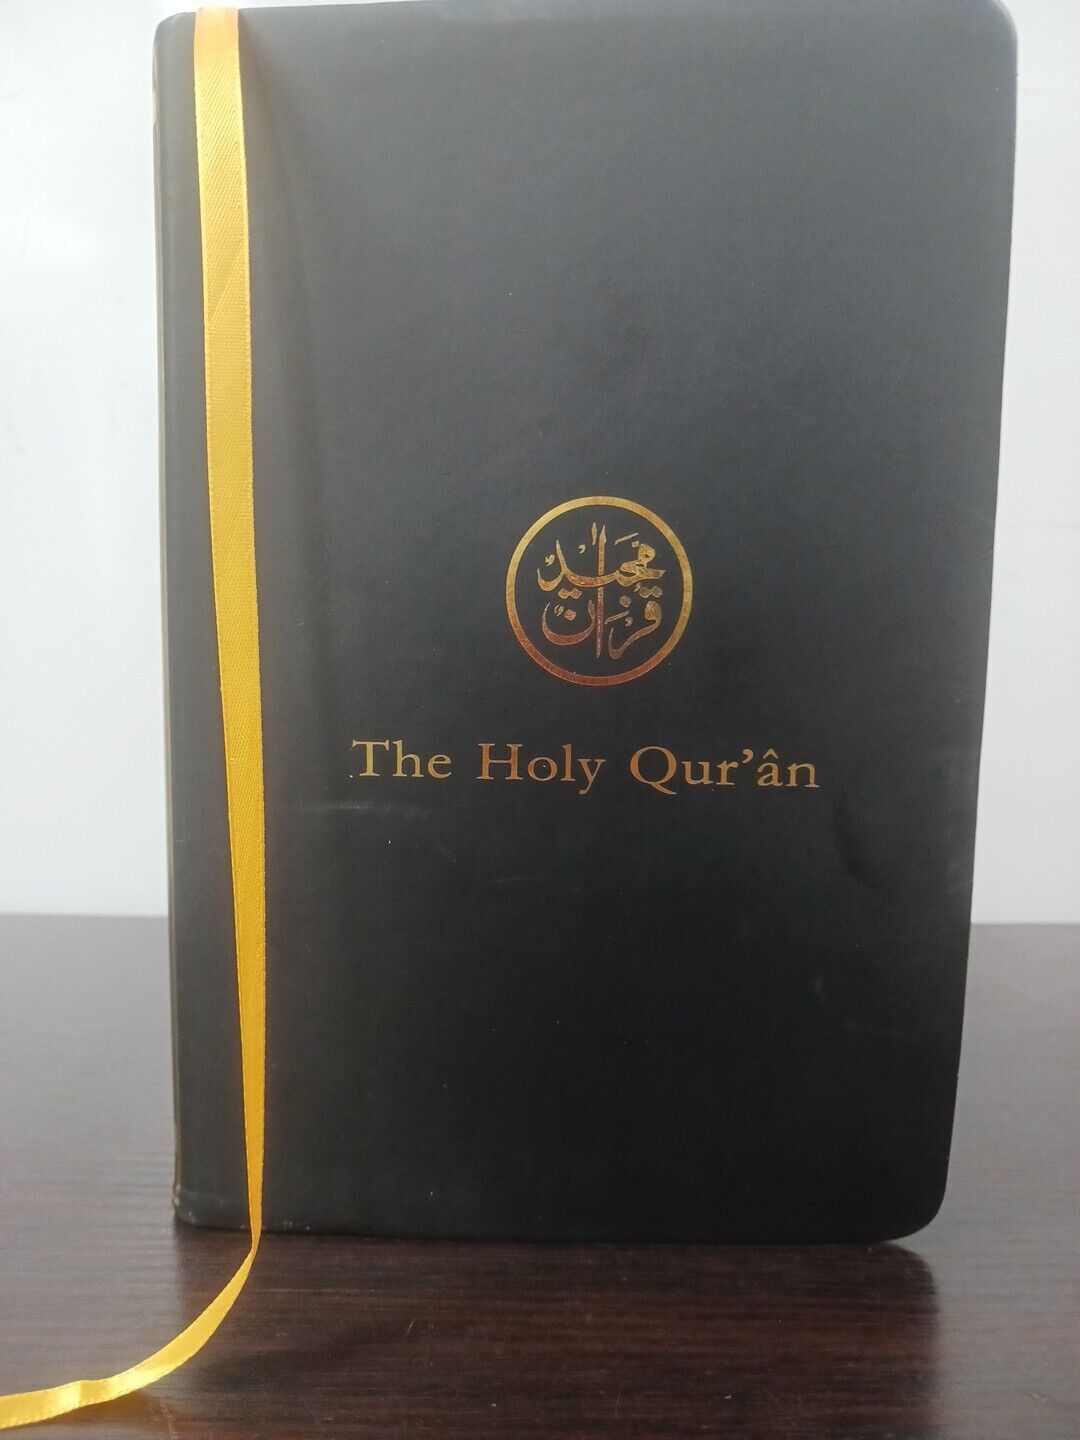 The Holy Quran Arabic Text English Translation (English and Arabic Edition)